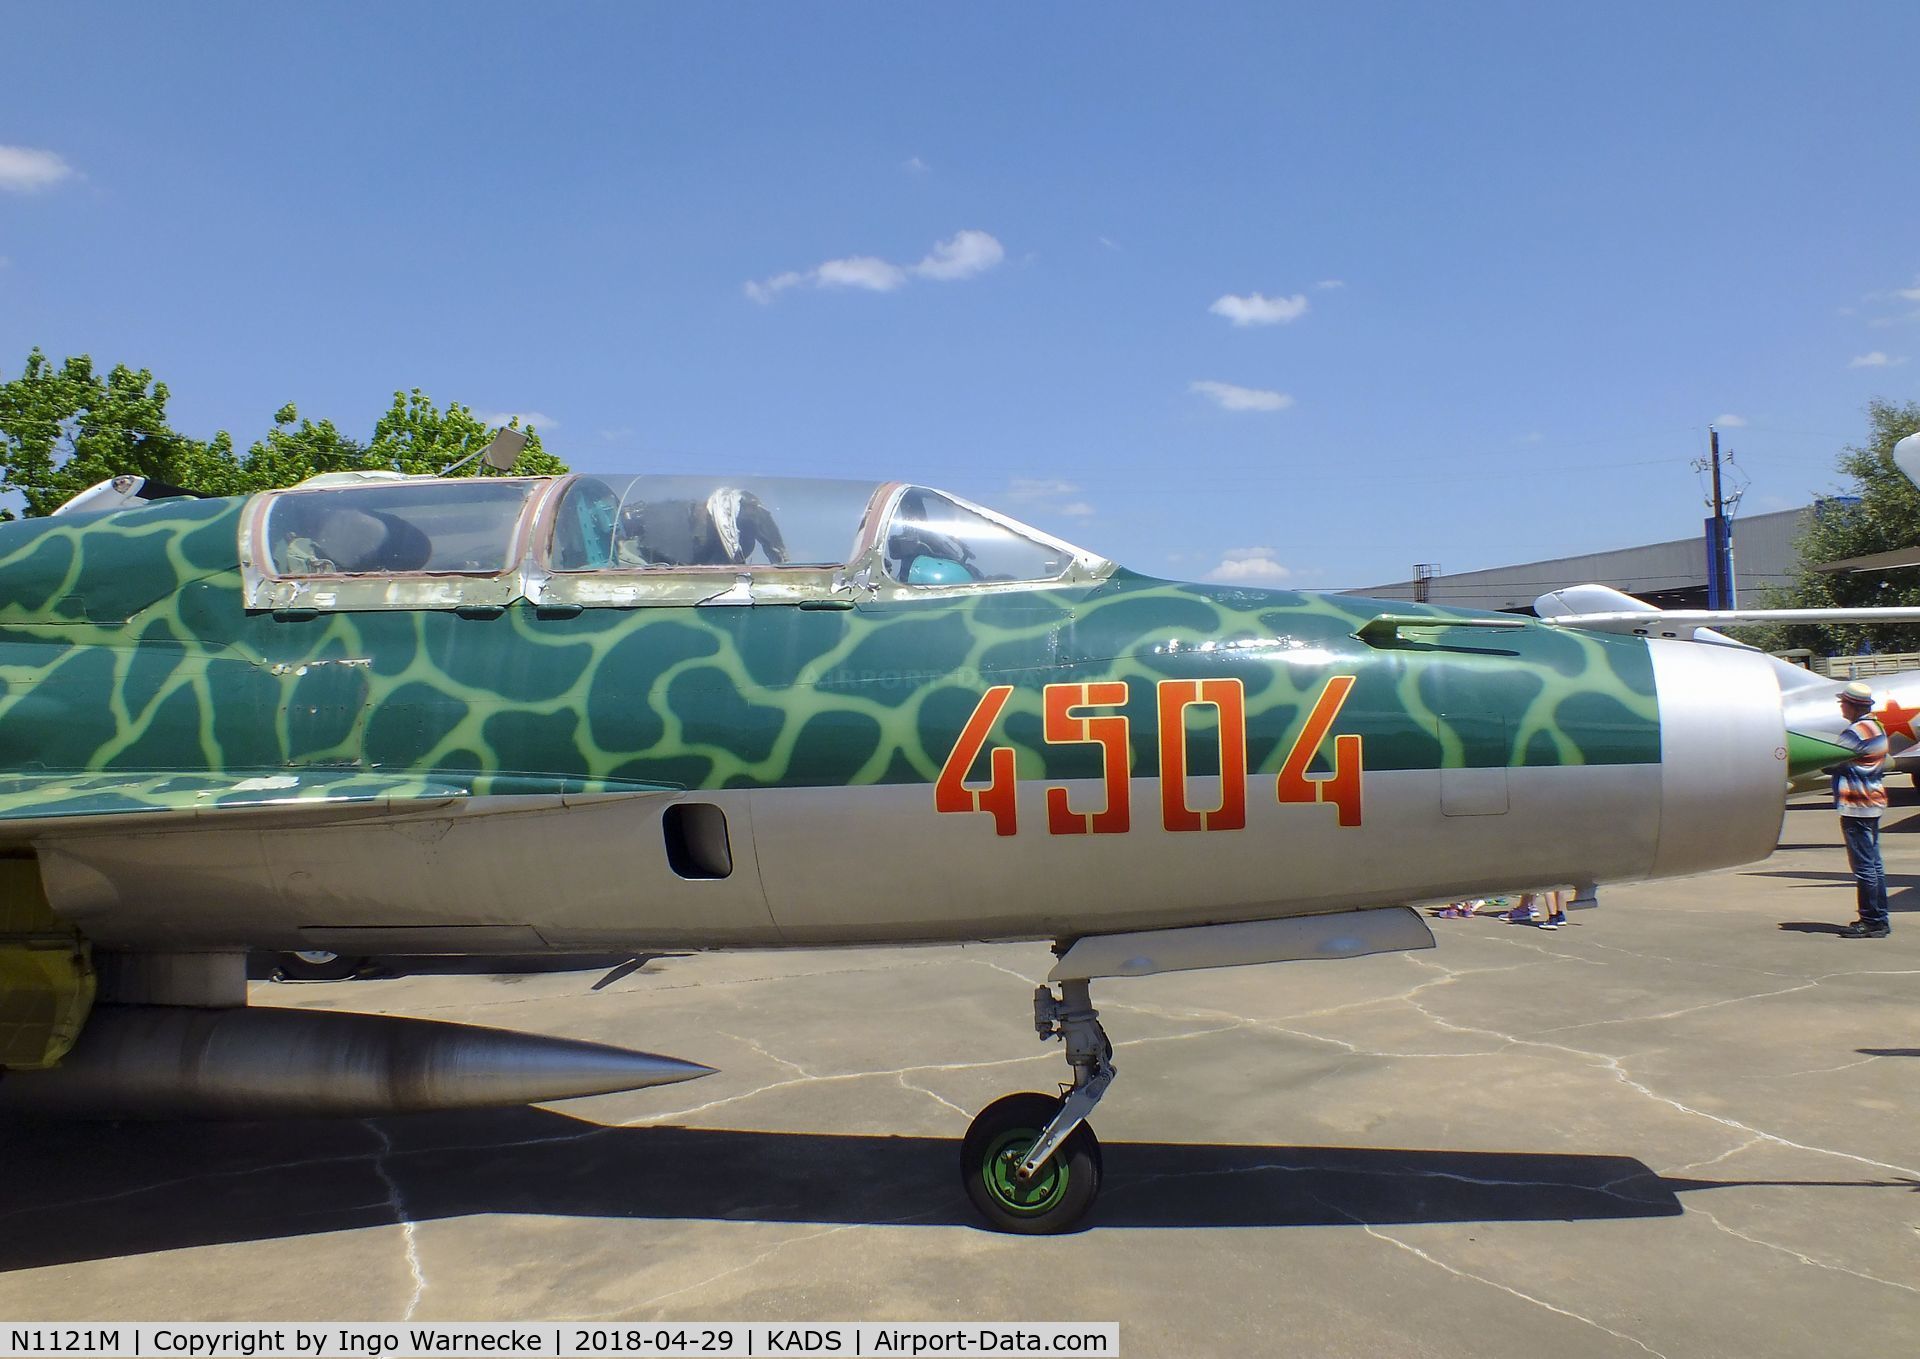 N1121M, Mikoyan-Gurevich MiG-21US C/N 4685145, Mikoyan i Gurevich MiG-21US MONGOL at the Cavanaugh Flight Museum, Addison TX